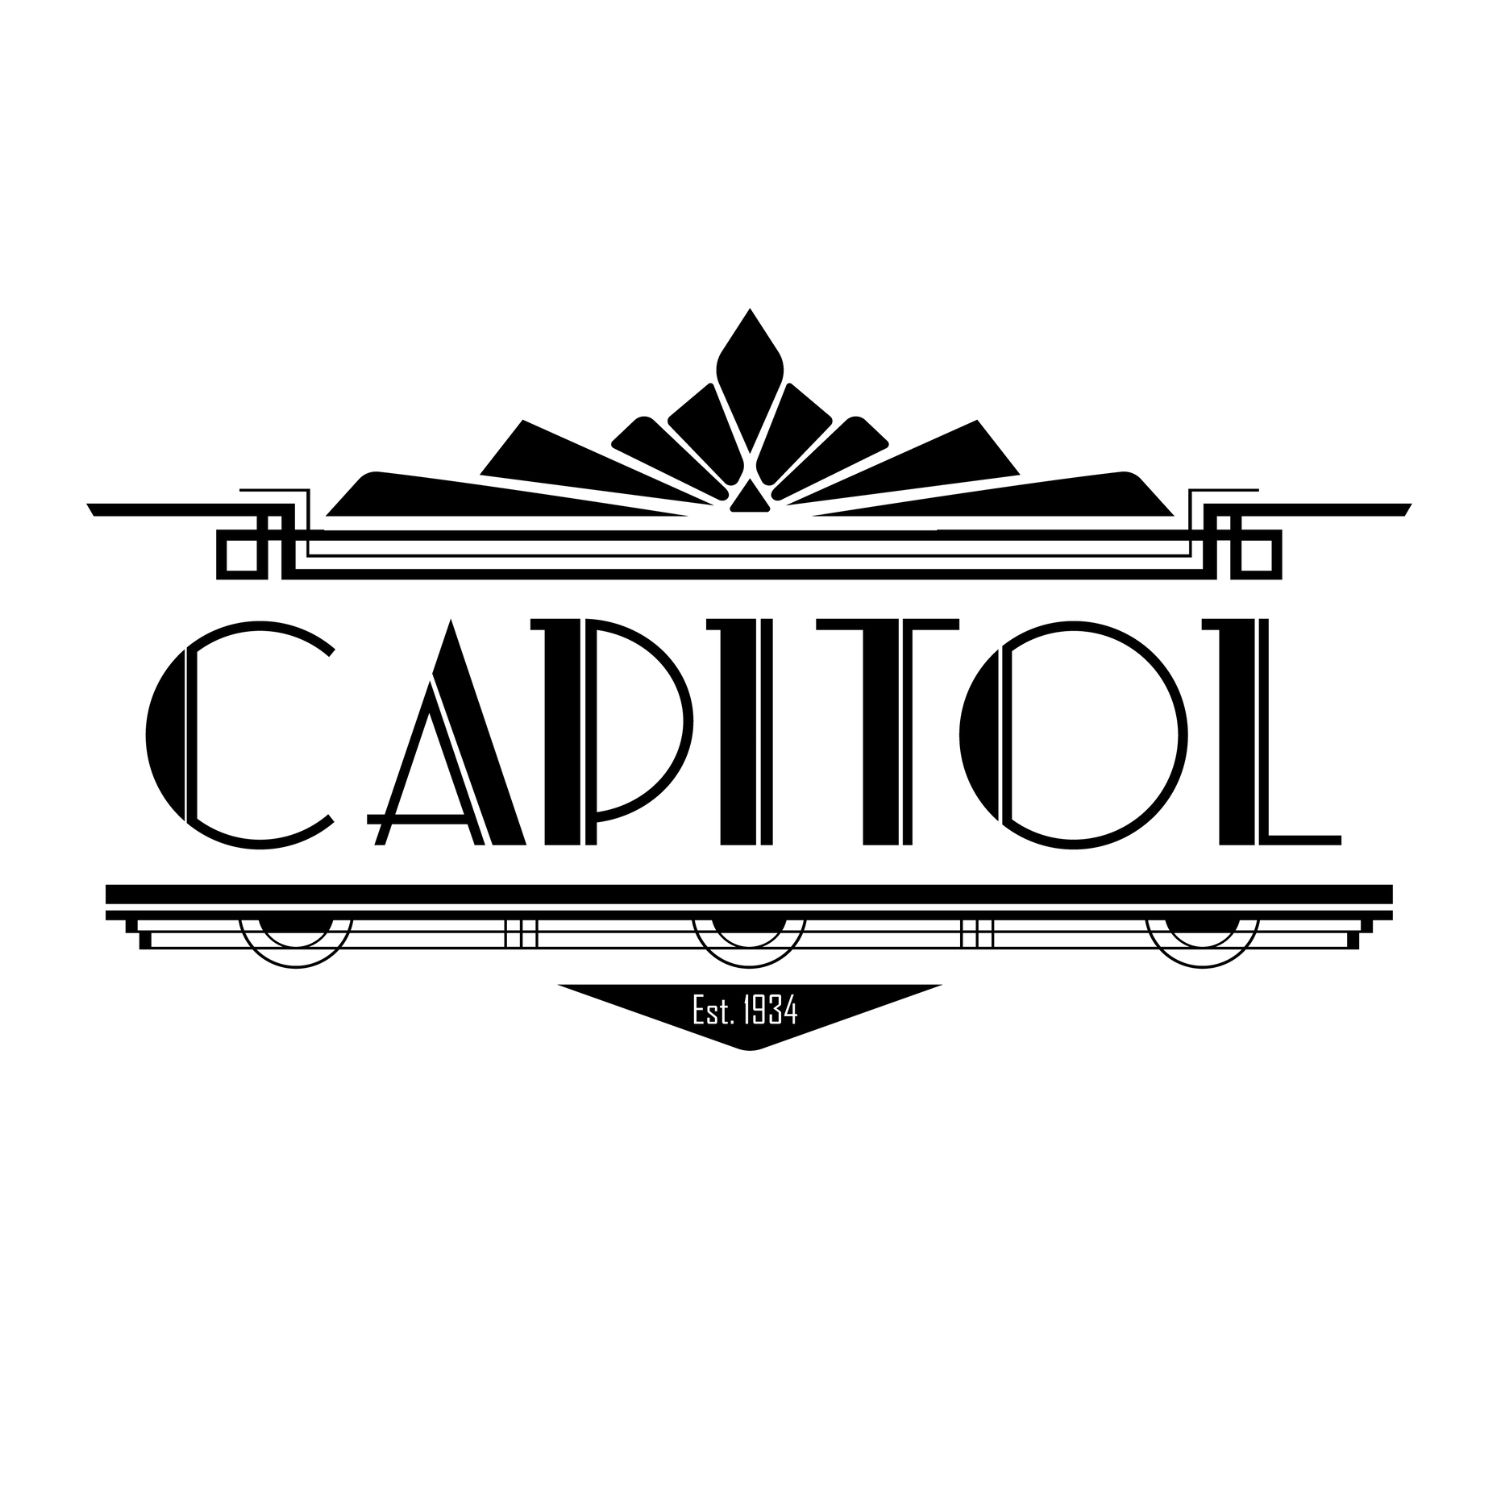 Capitol Theater logo